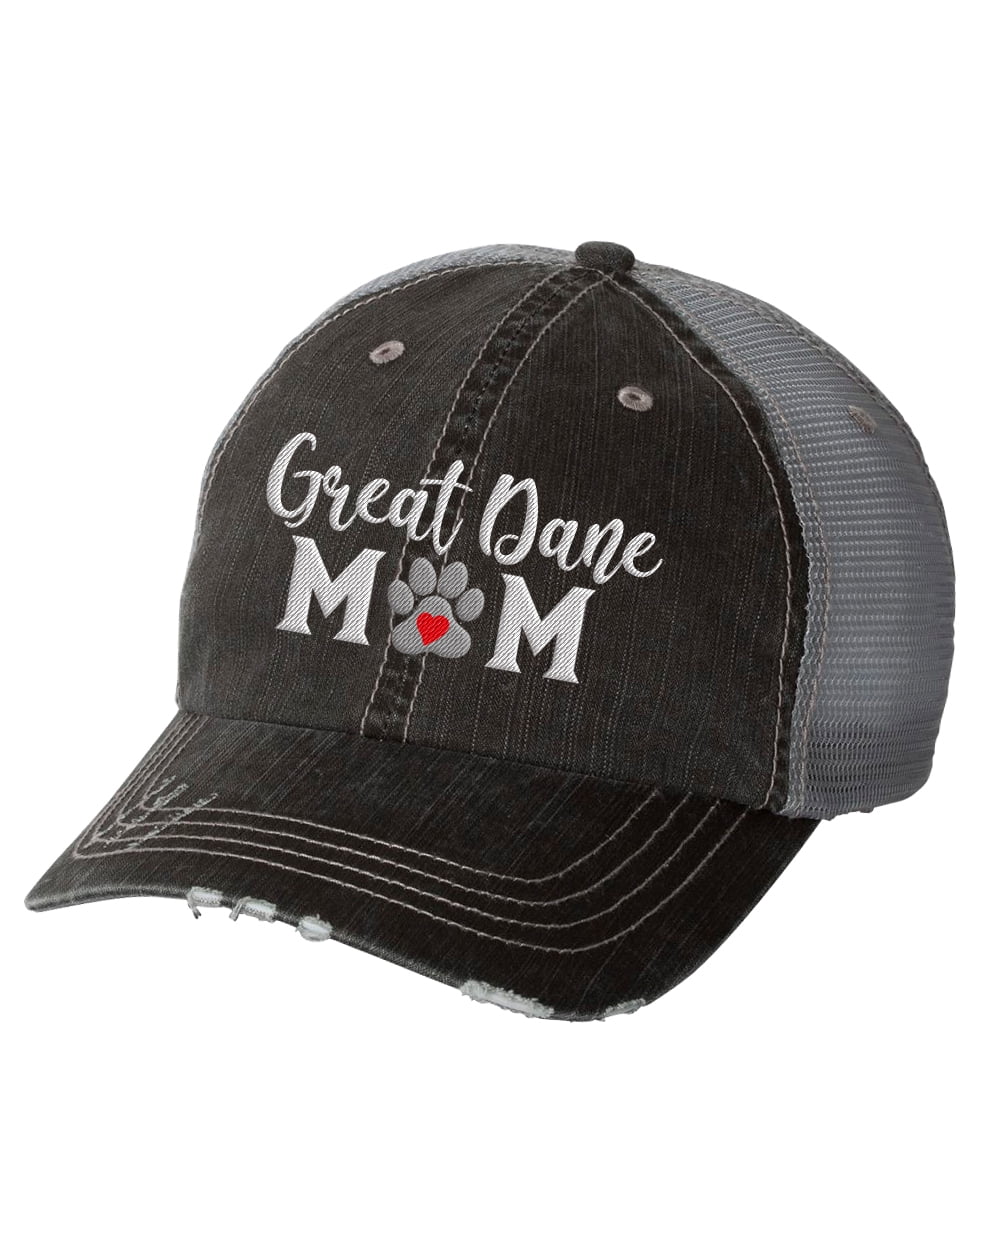 Women's Embroidered Dog Mom Distressed Baseball Cap, Black/Grey-Great Dane